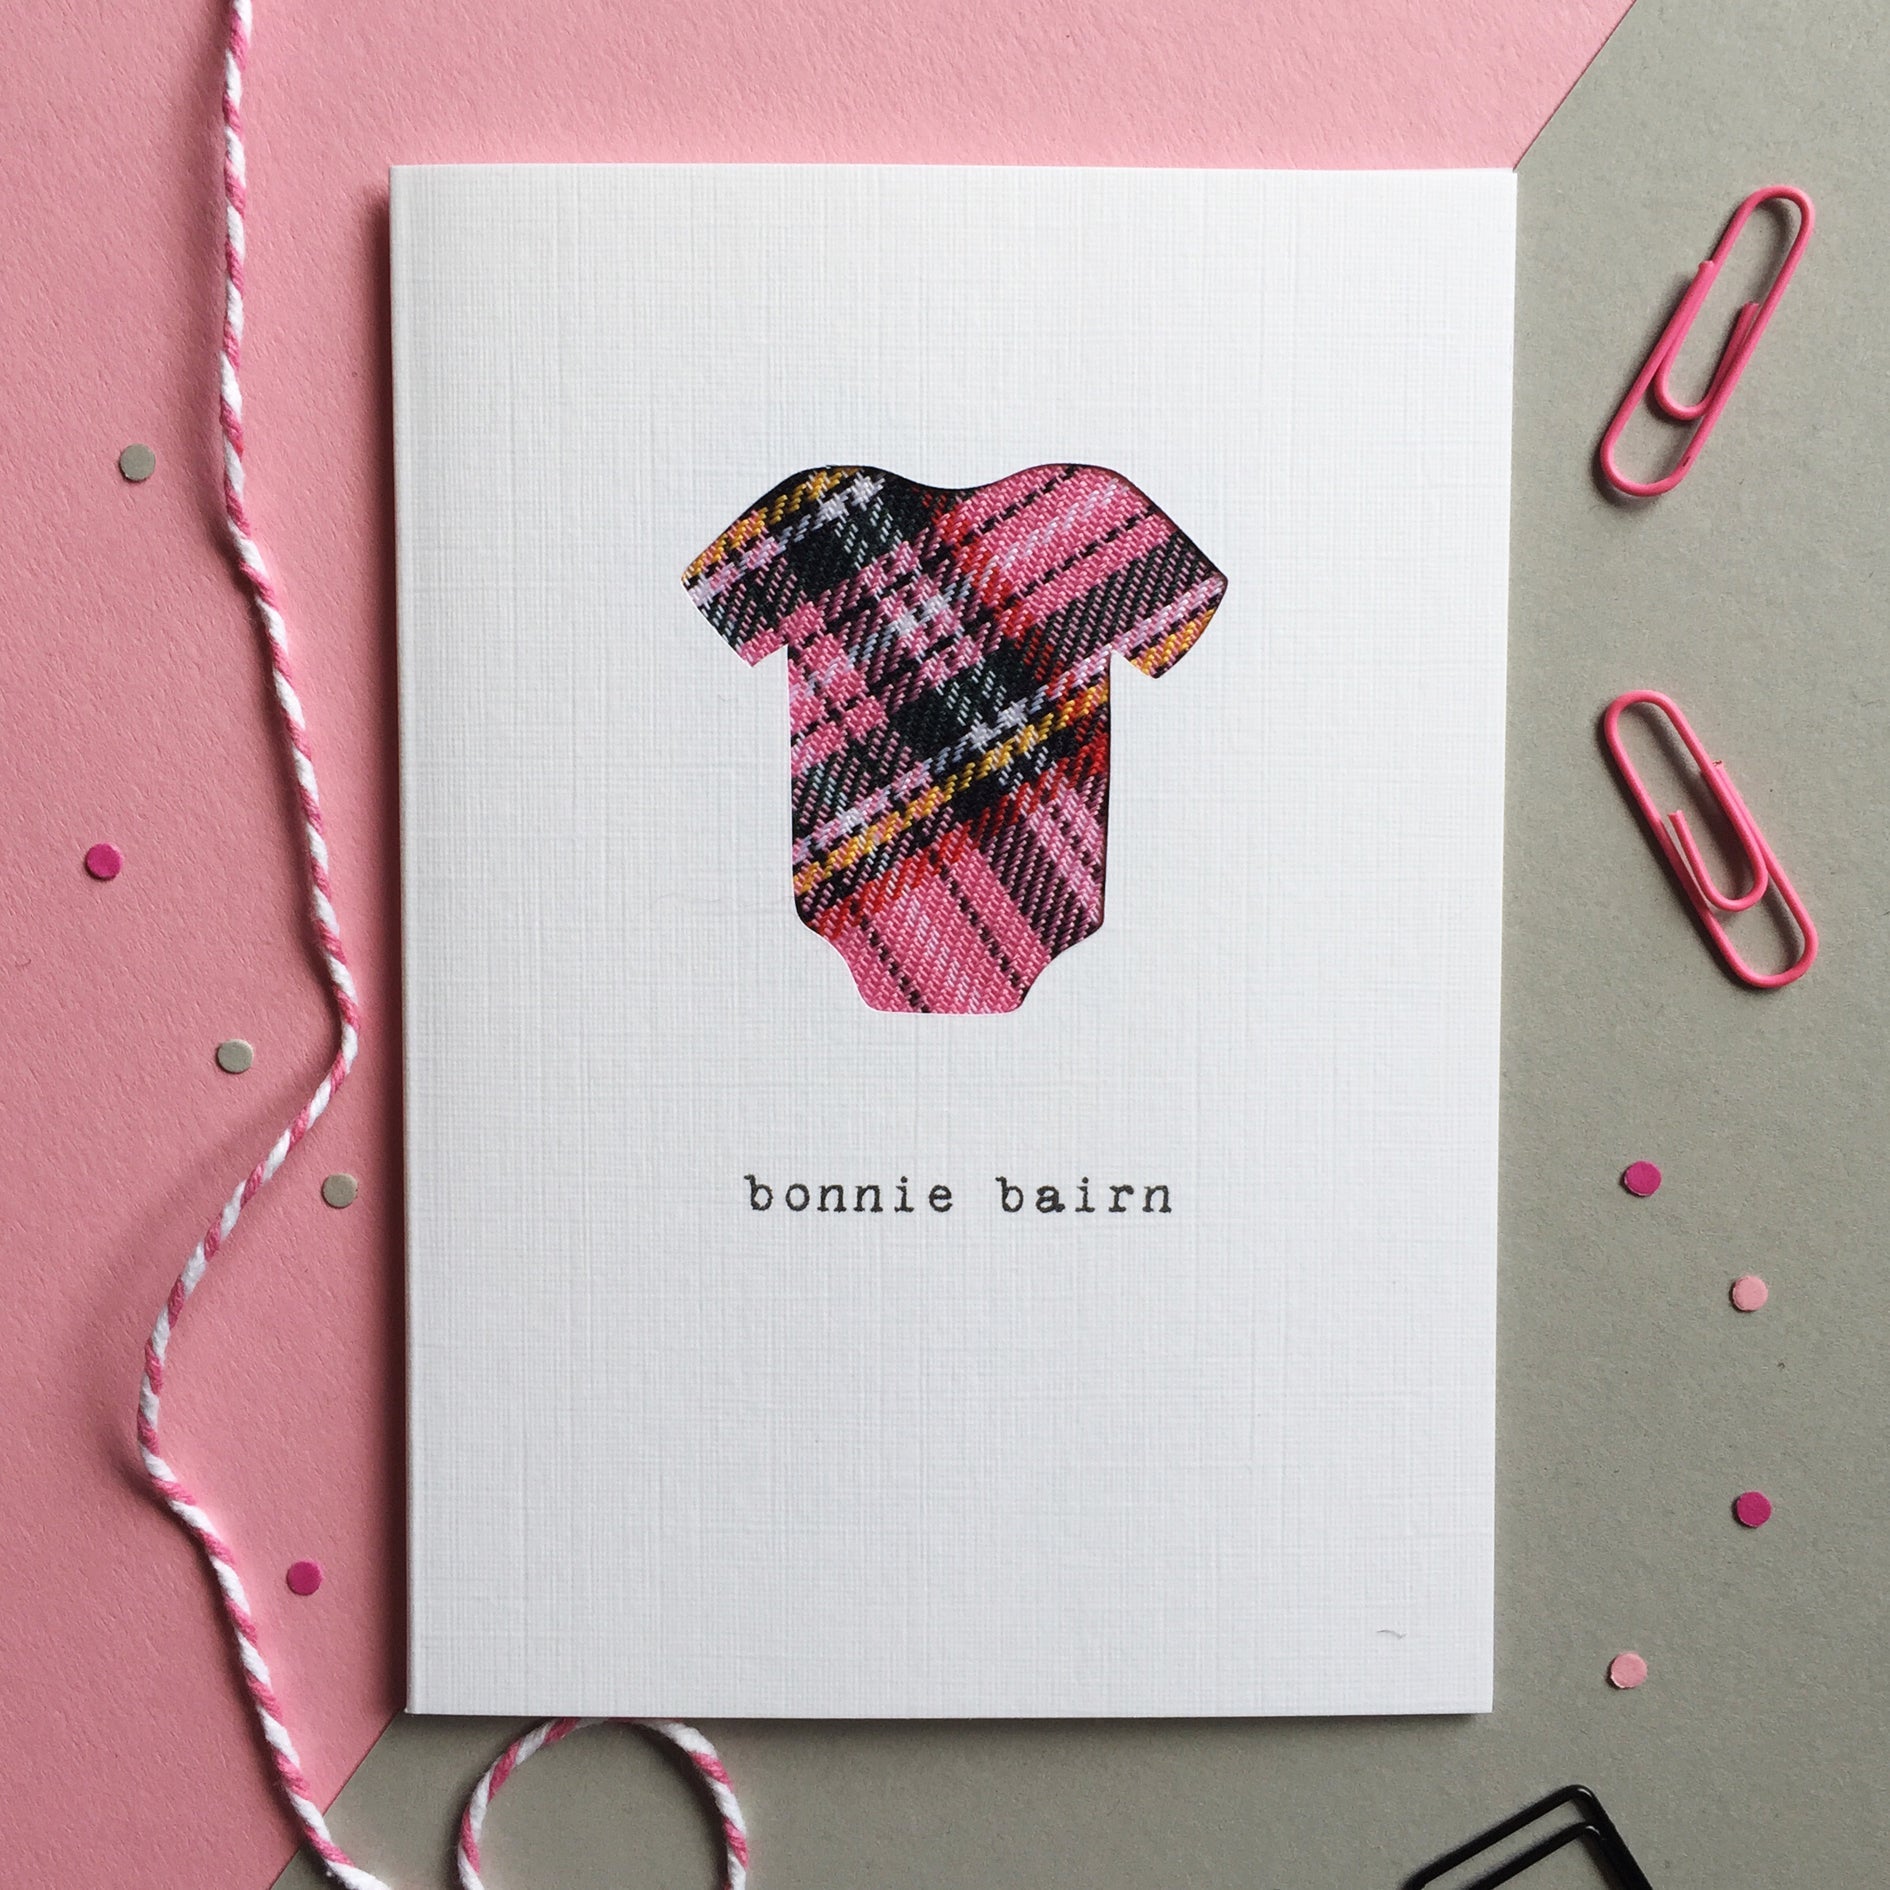 Personalised Scottish New Baby Card with Tartan - HiyaPal